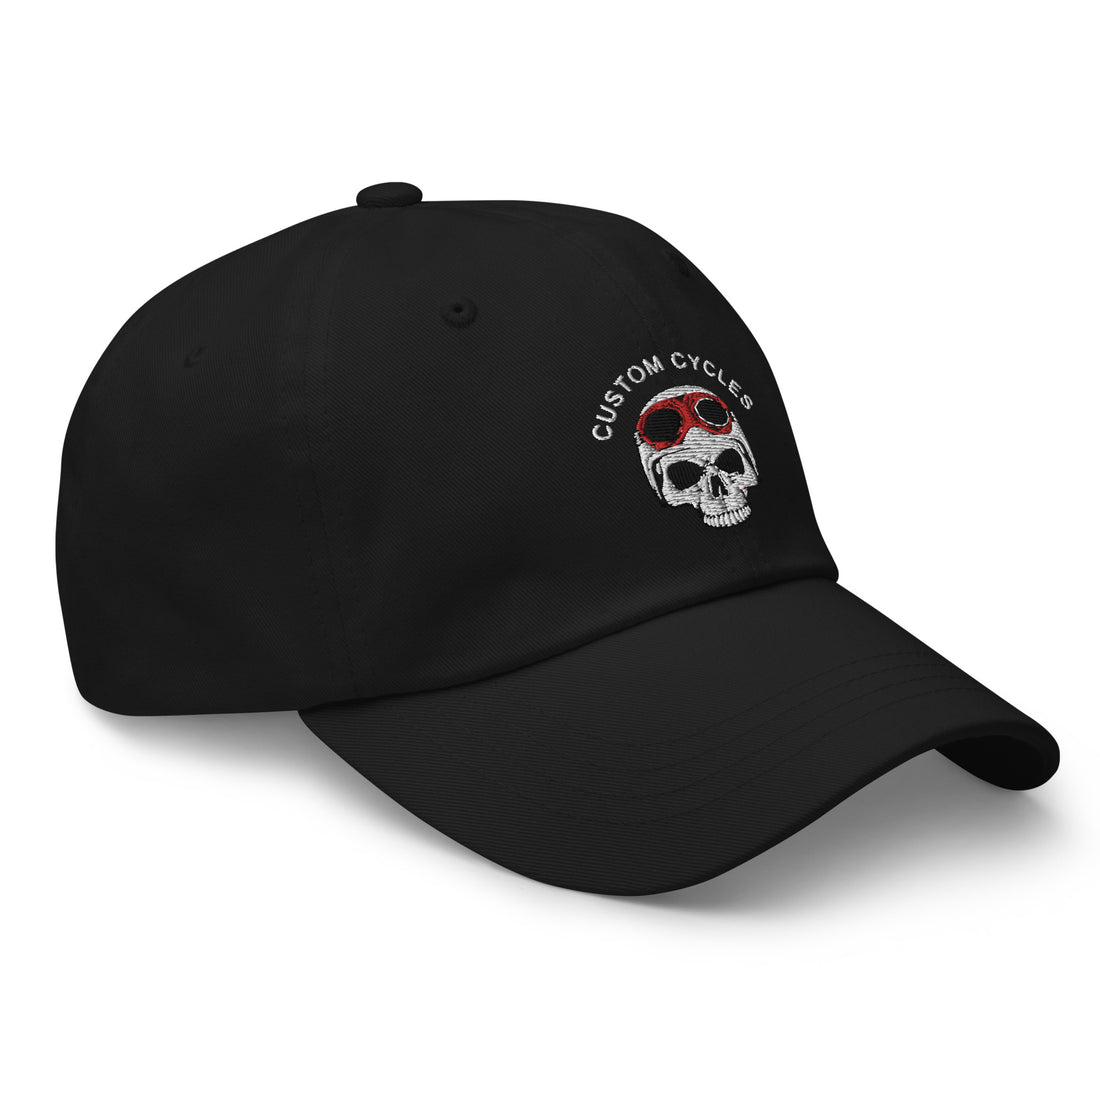 Custom Cycles Skull Hat